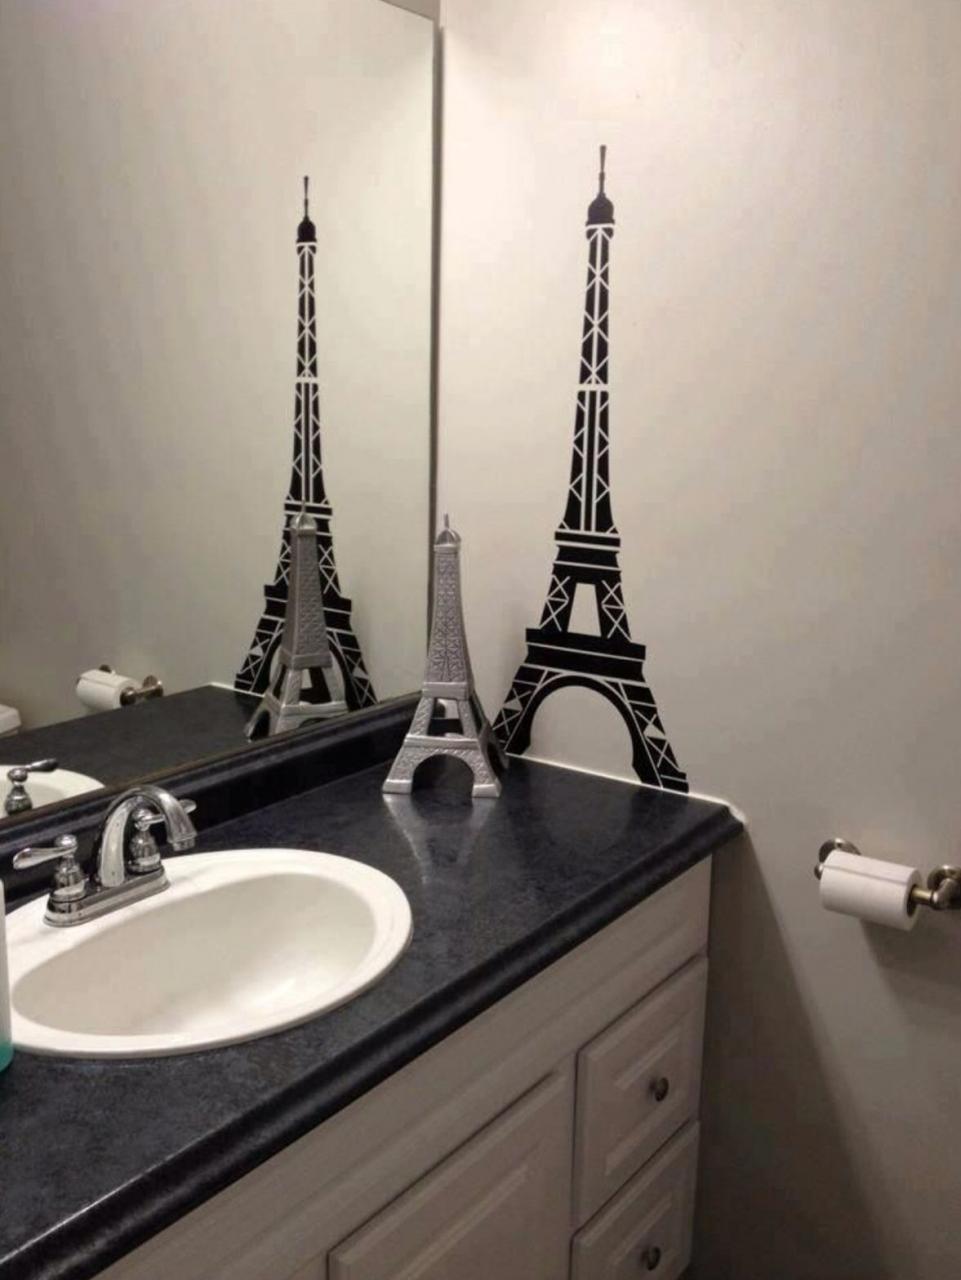 Paris/Eiffel Tower themed bathroom decor.....J'adore! Paris bathroom